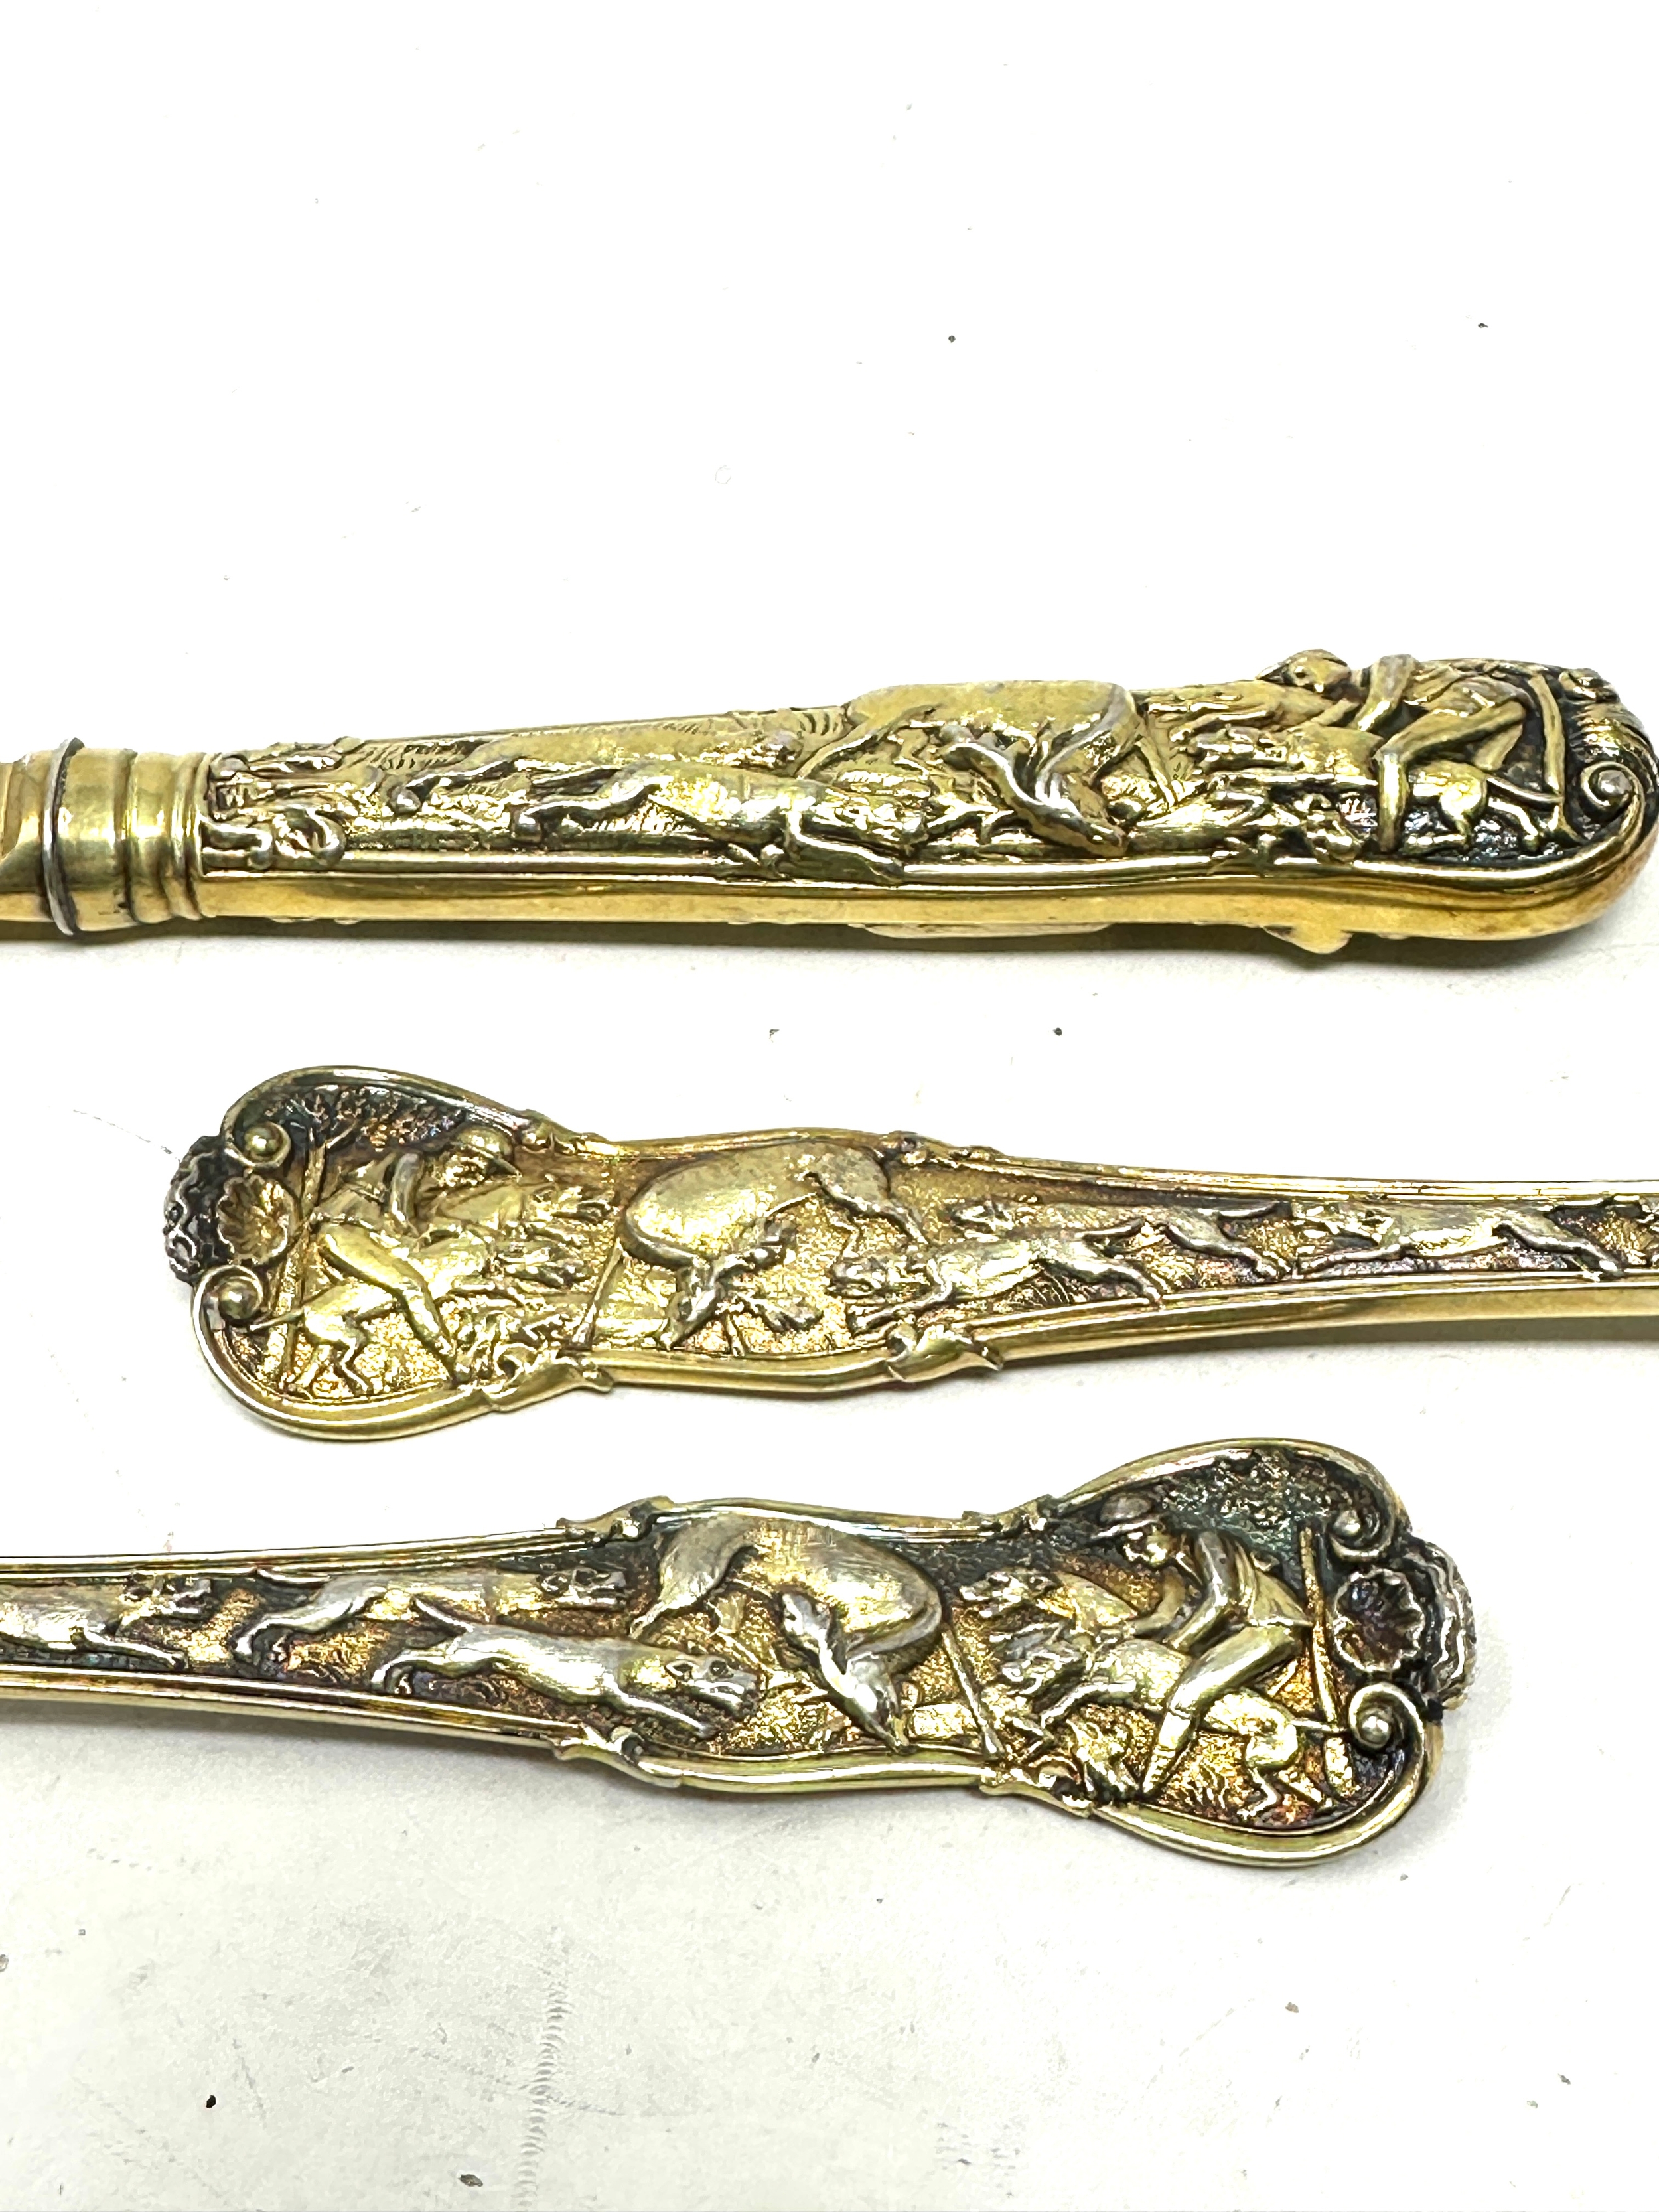 Antique georgian silver ornate embossed knife fork & spoon London silver hallmarks - Image 3 of 4